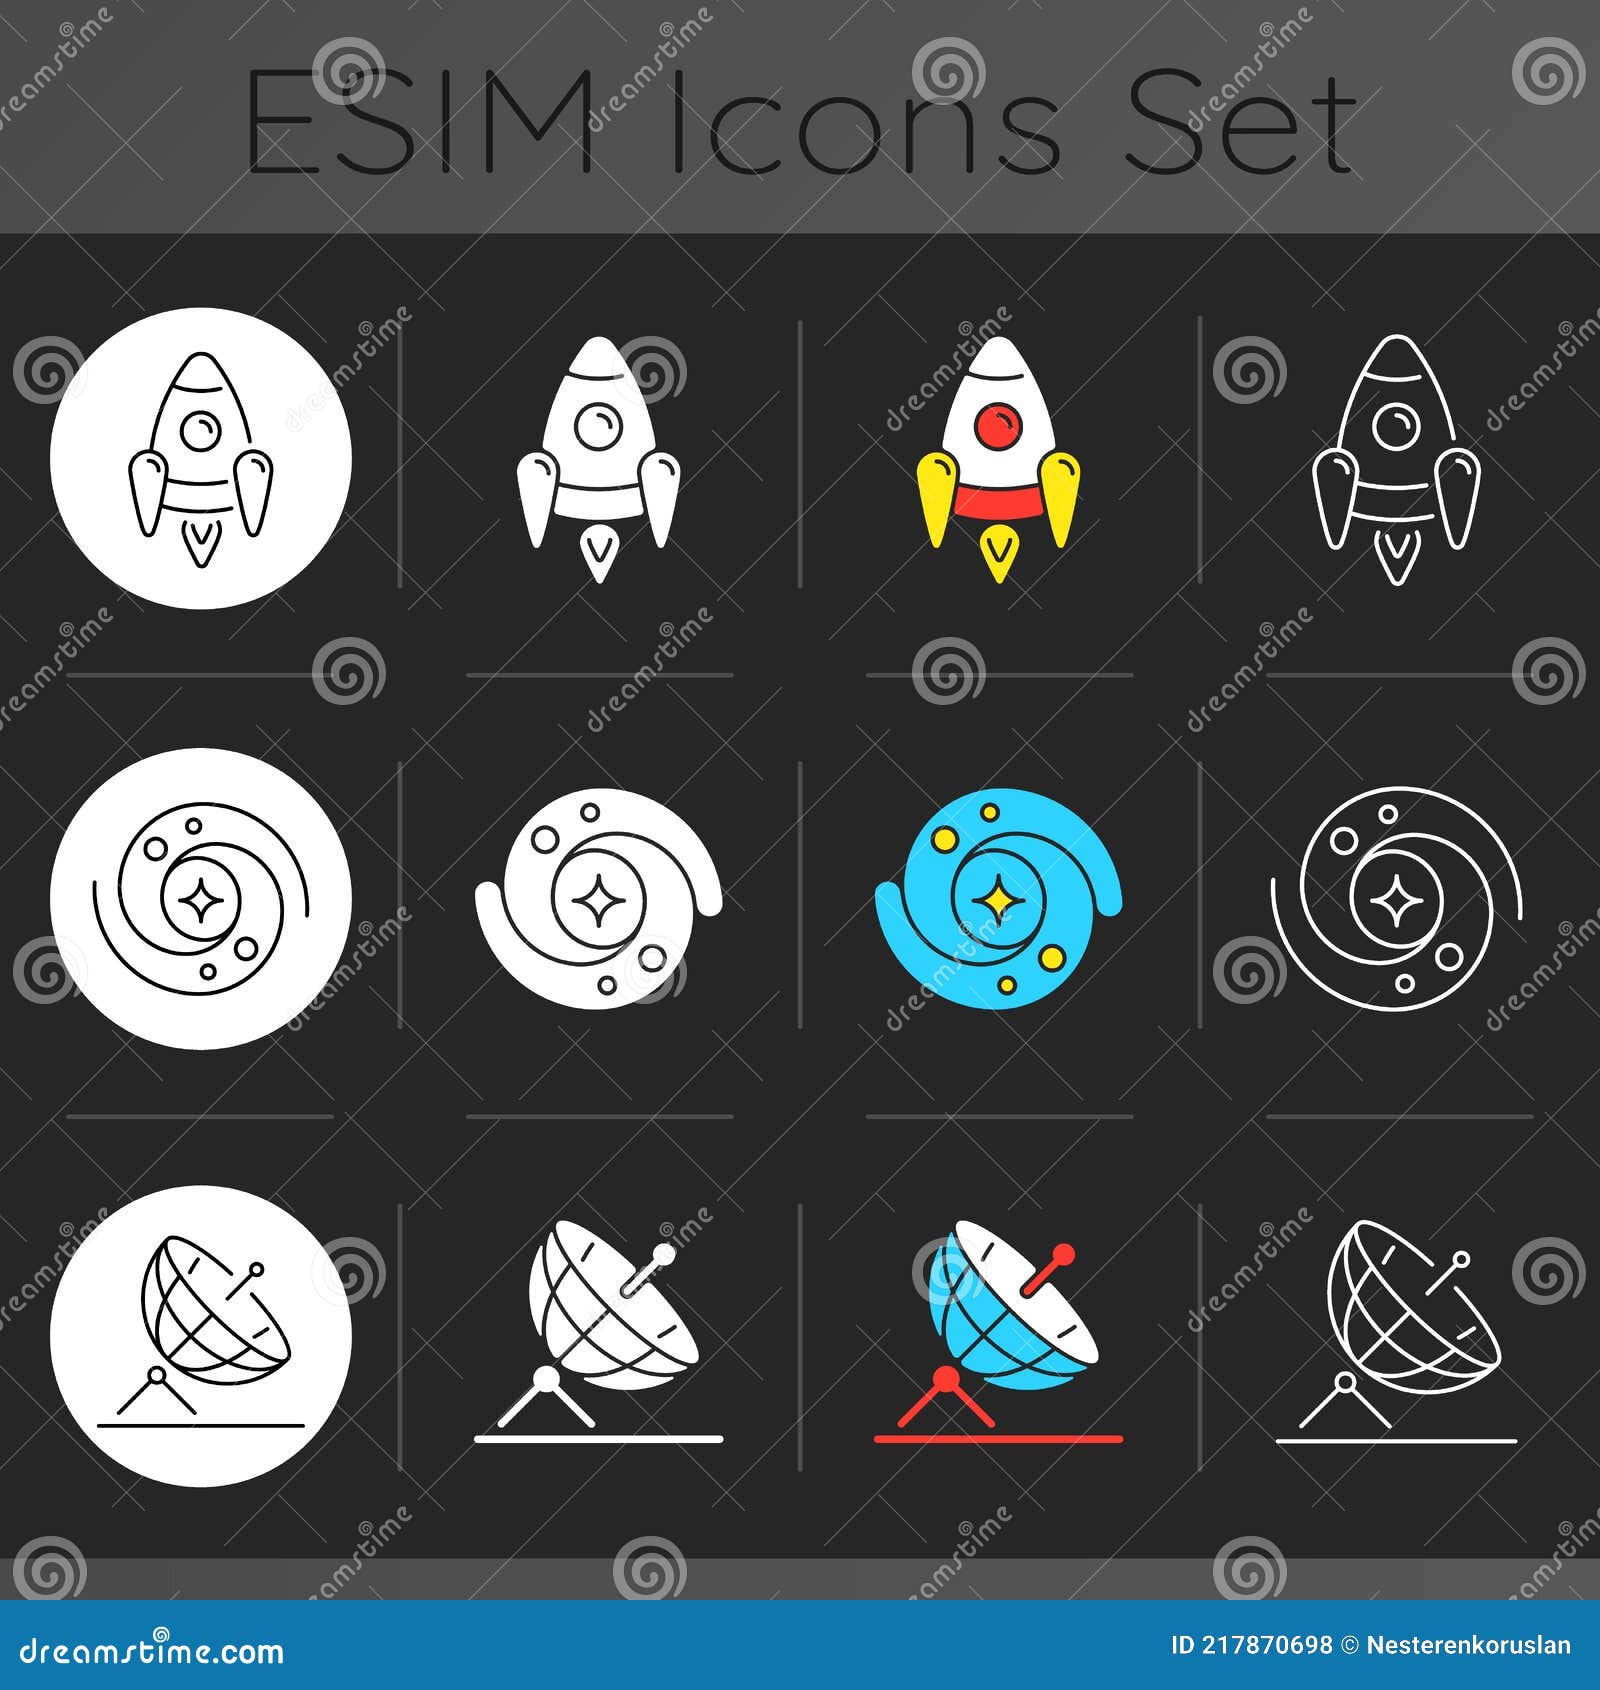 astronautic dark theme icons set